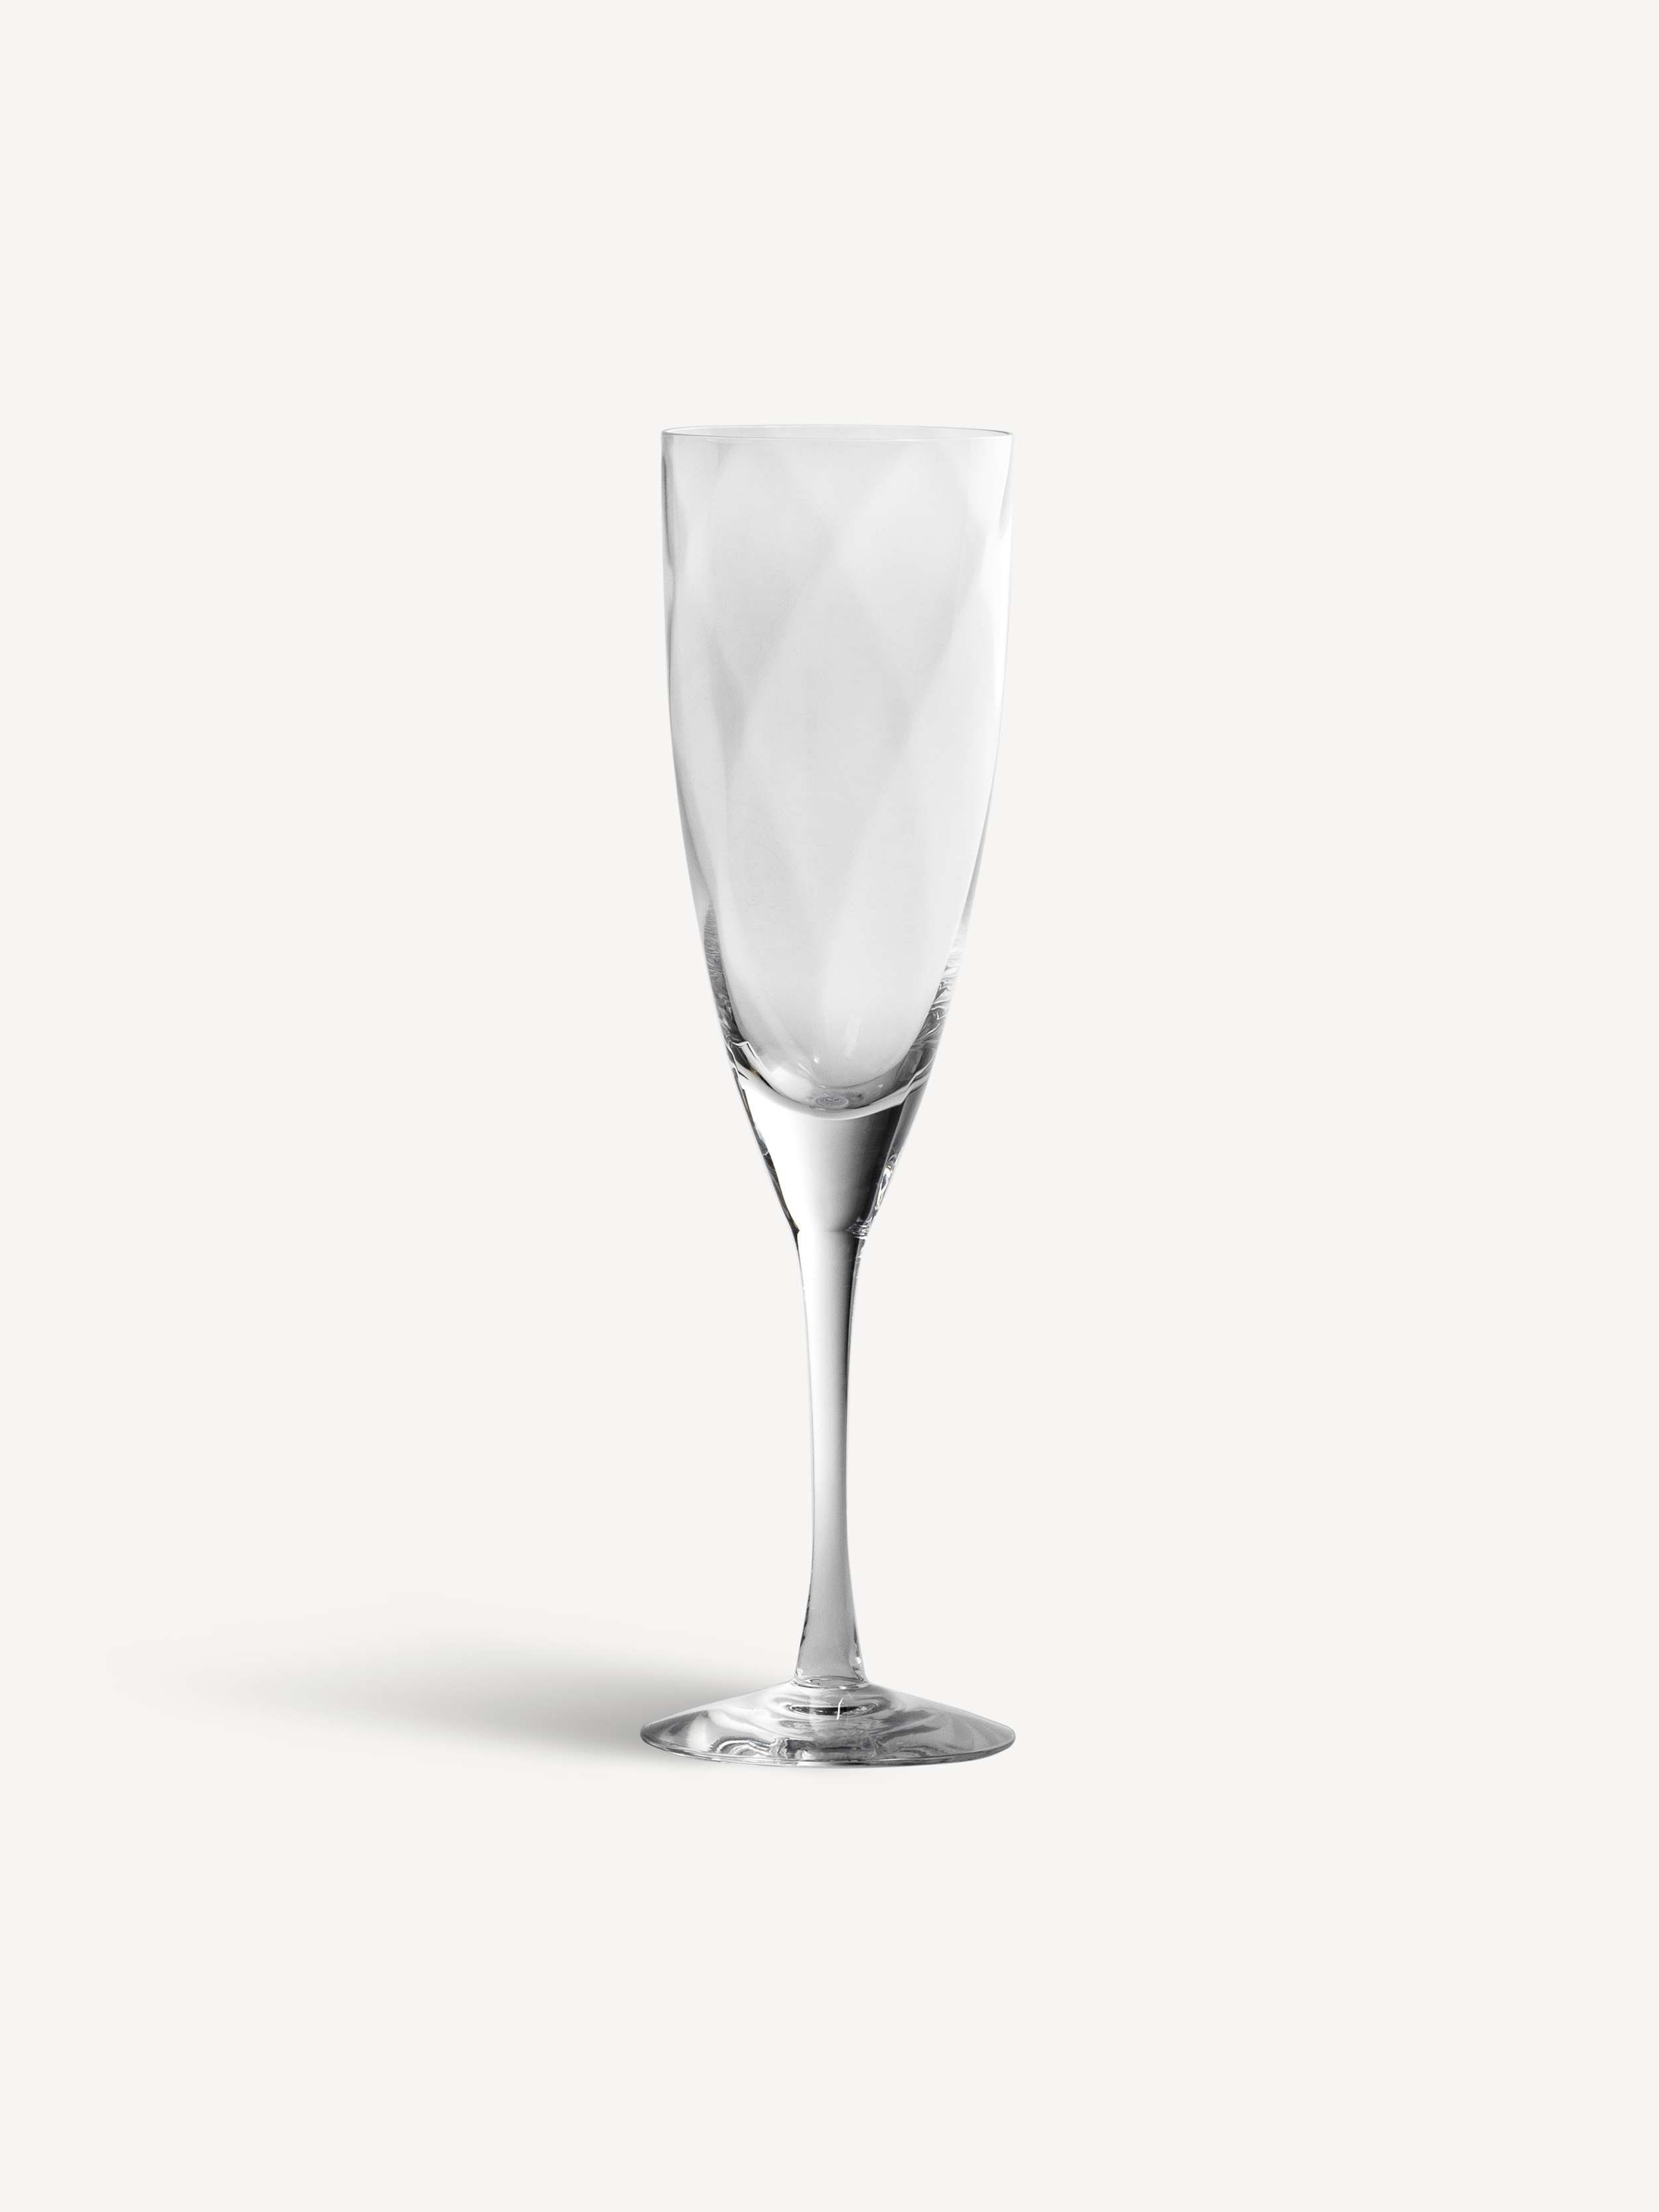 Château champagne glass 21cl | Kosta Boda